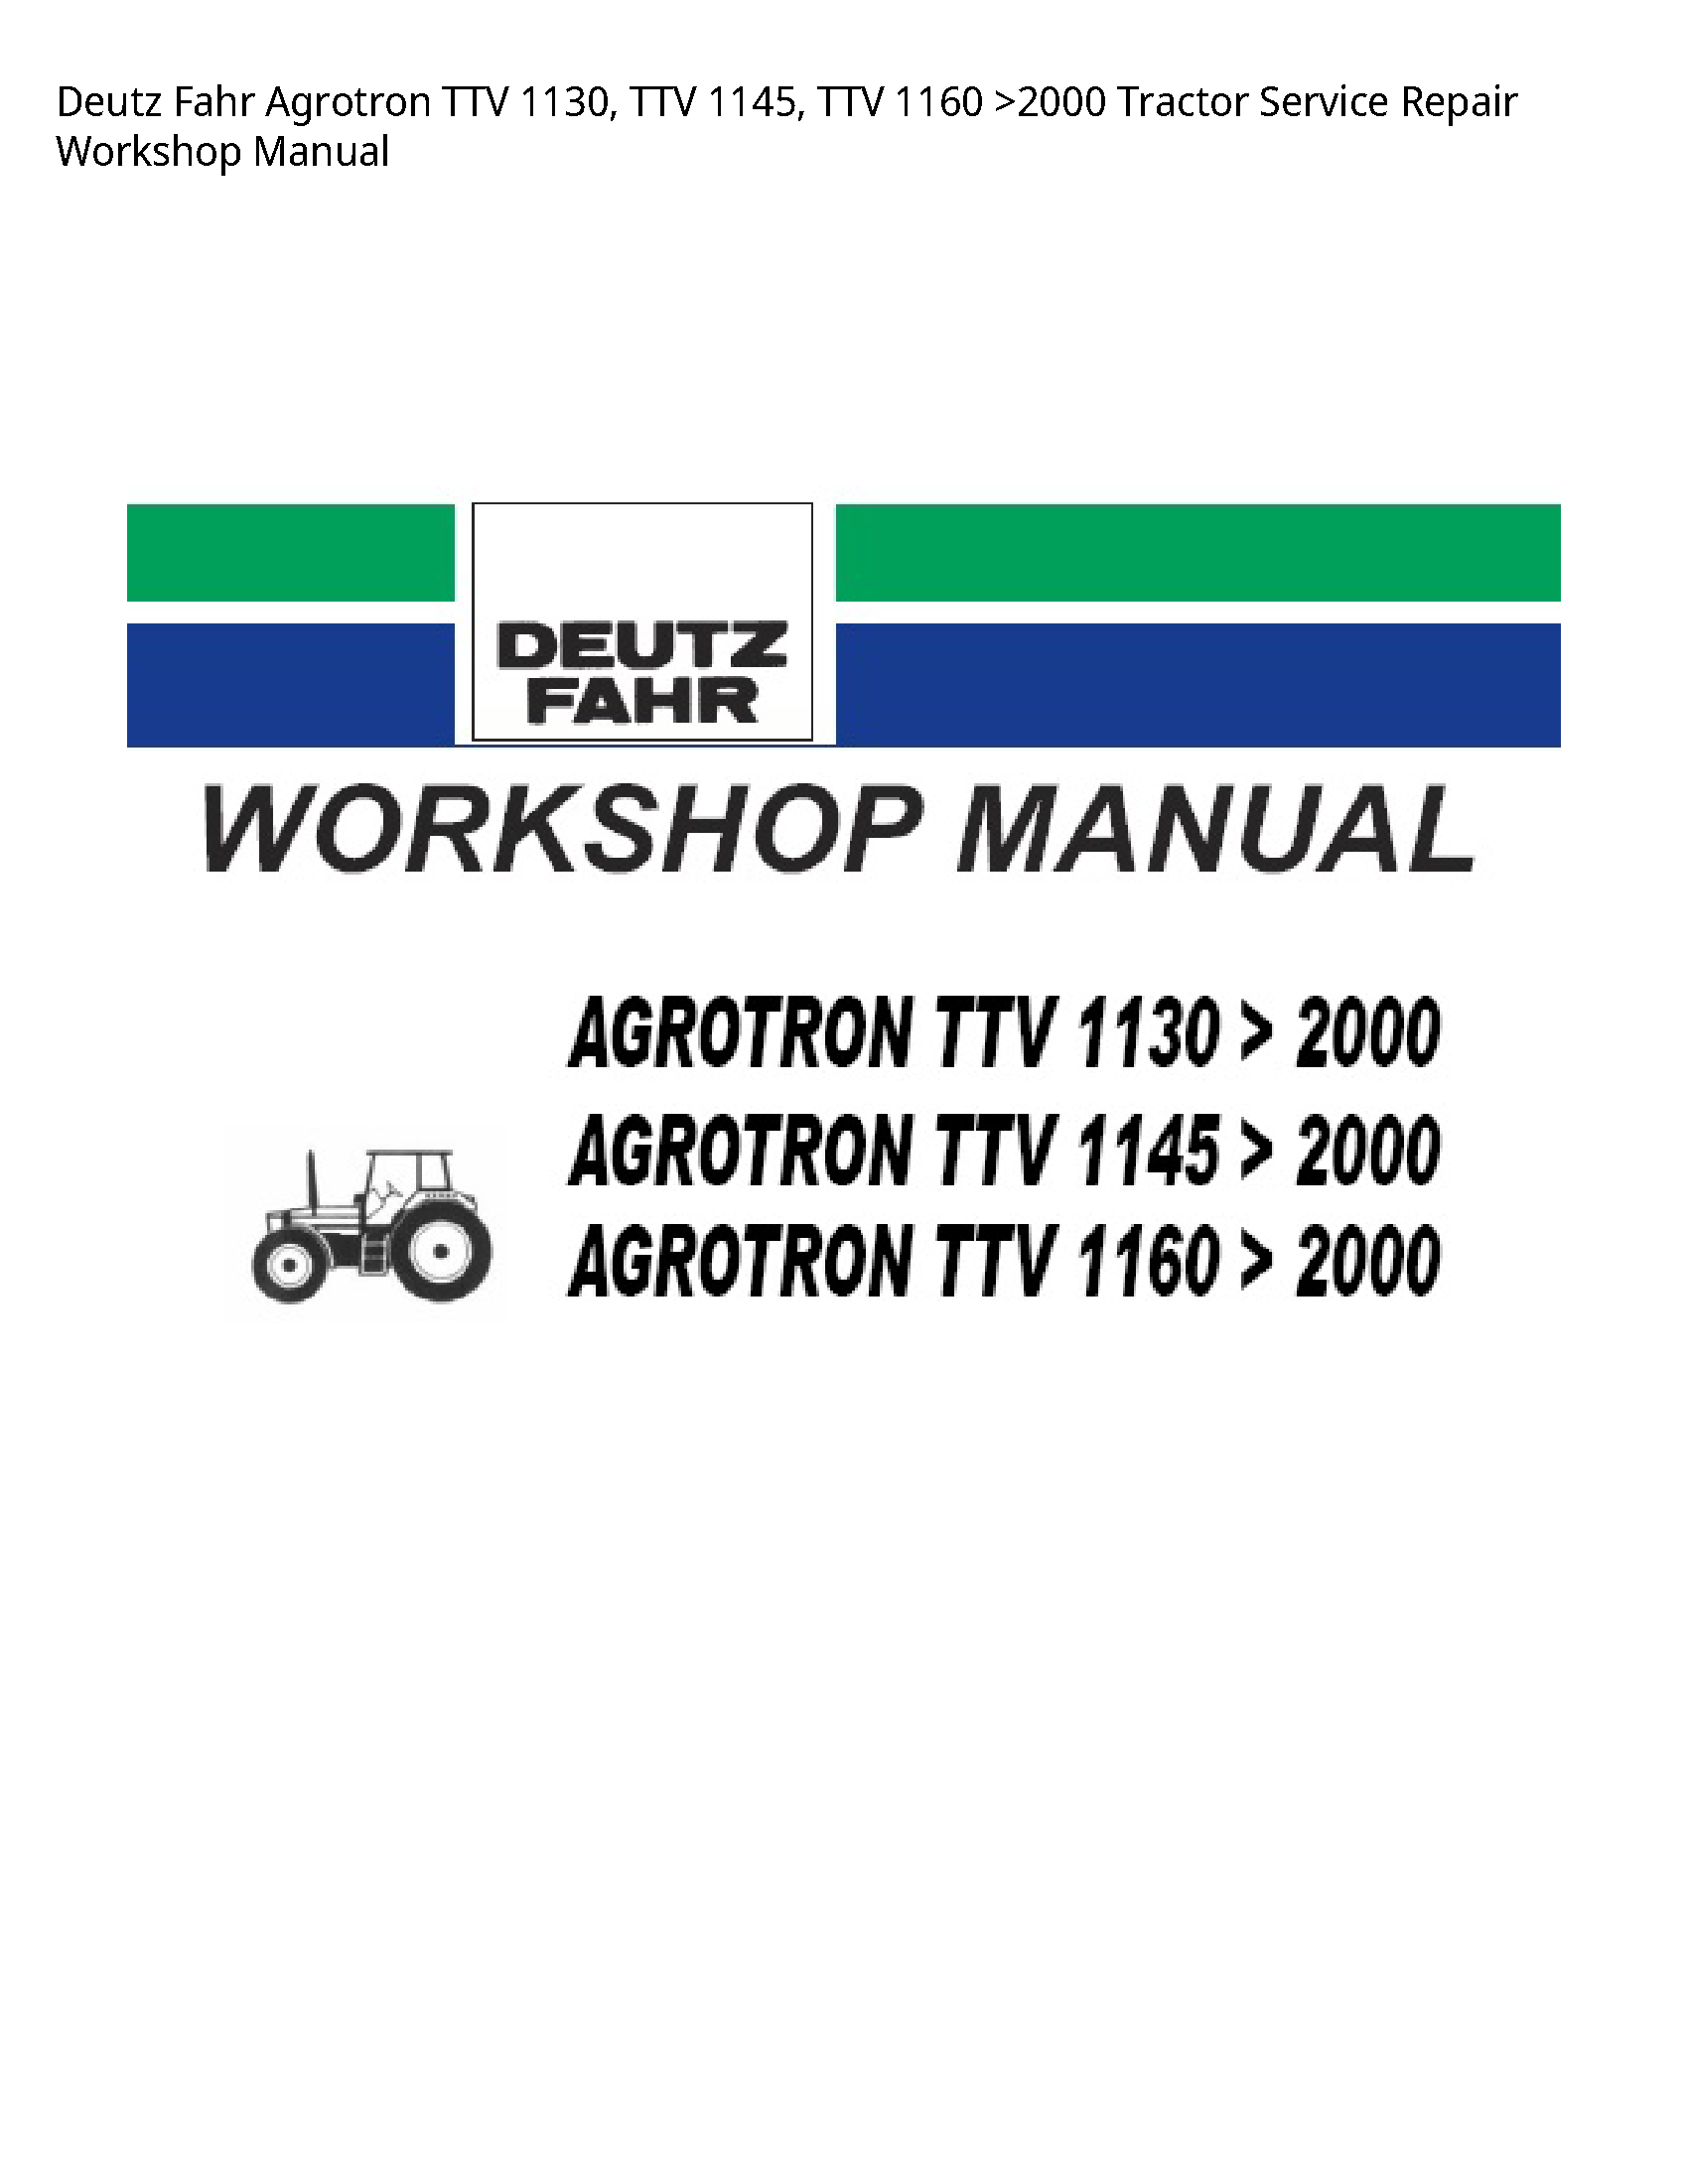 Deutz 1130 Fahr Agrotron TTV TTV TTV Tractor manual